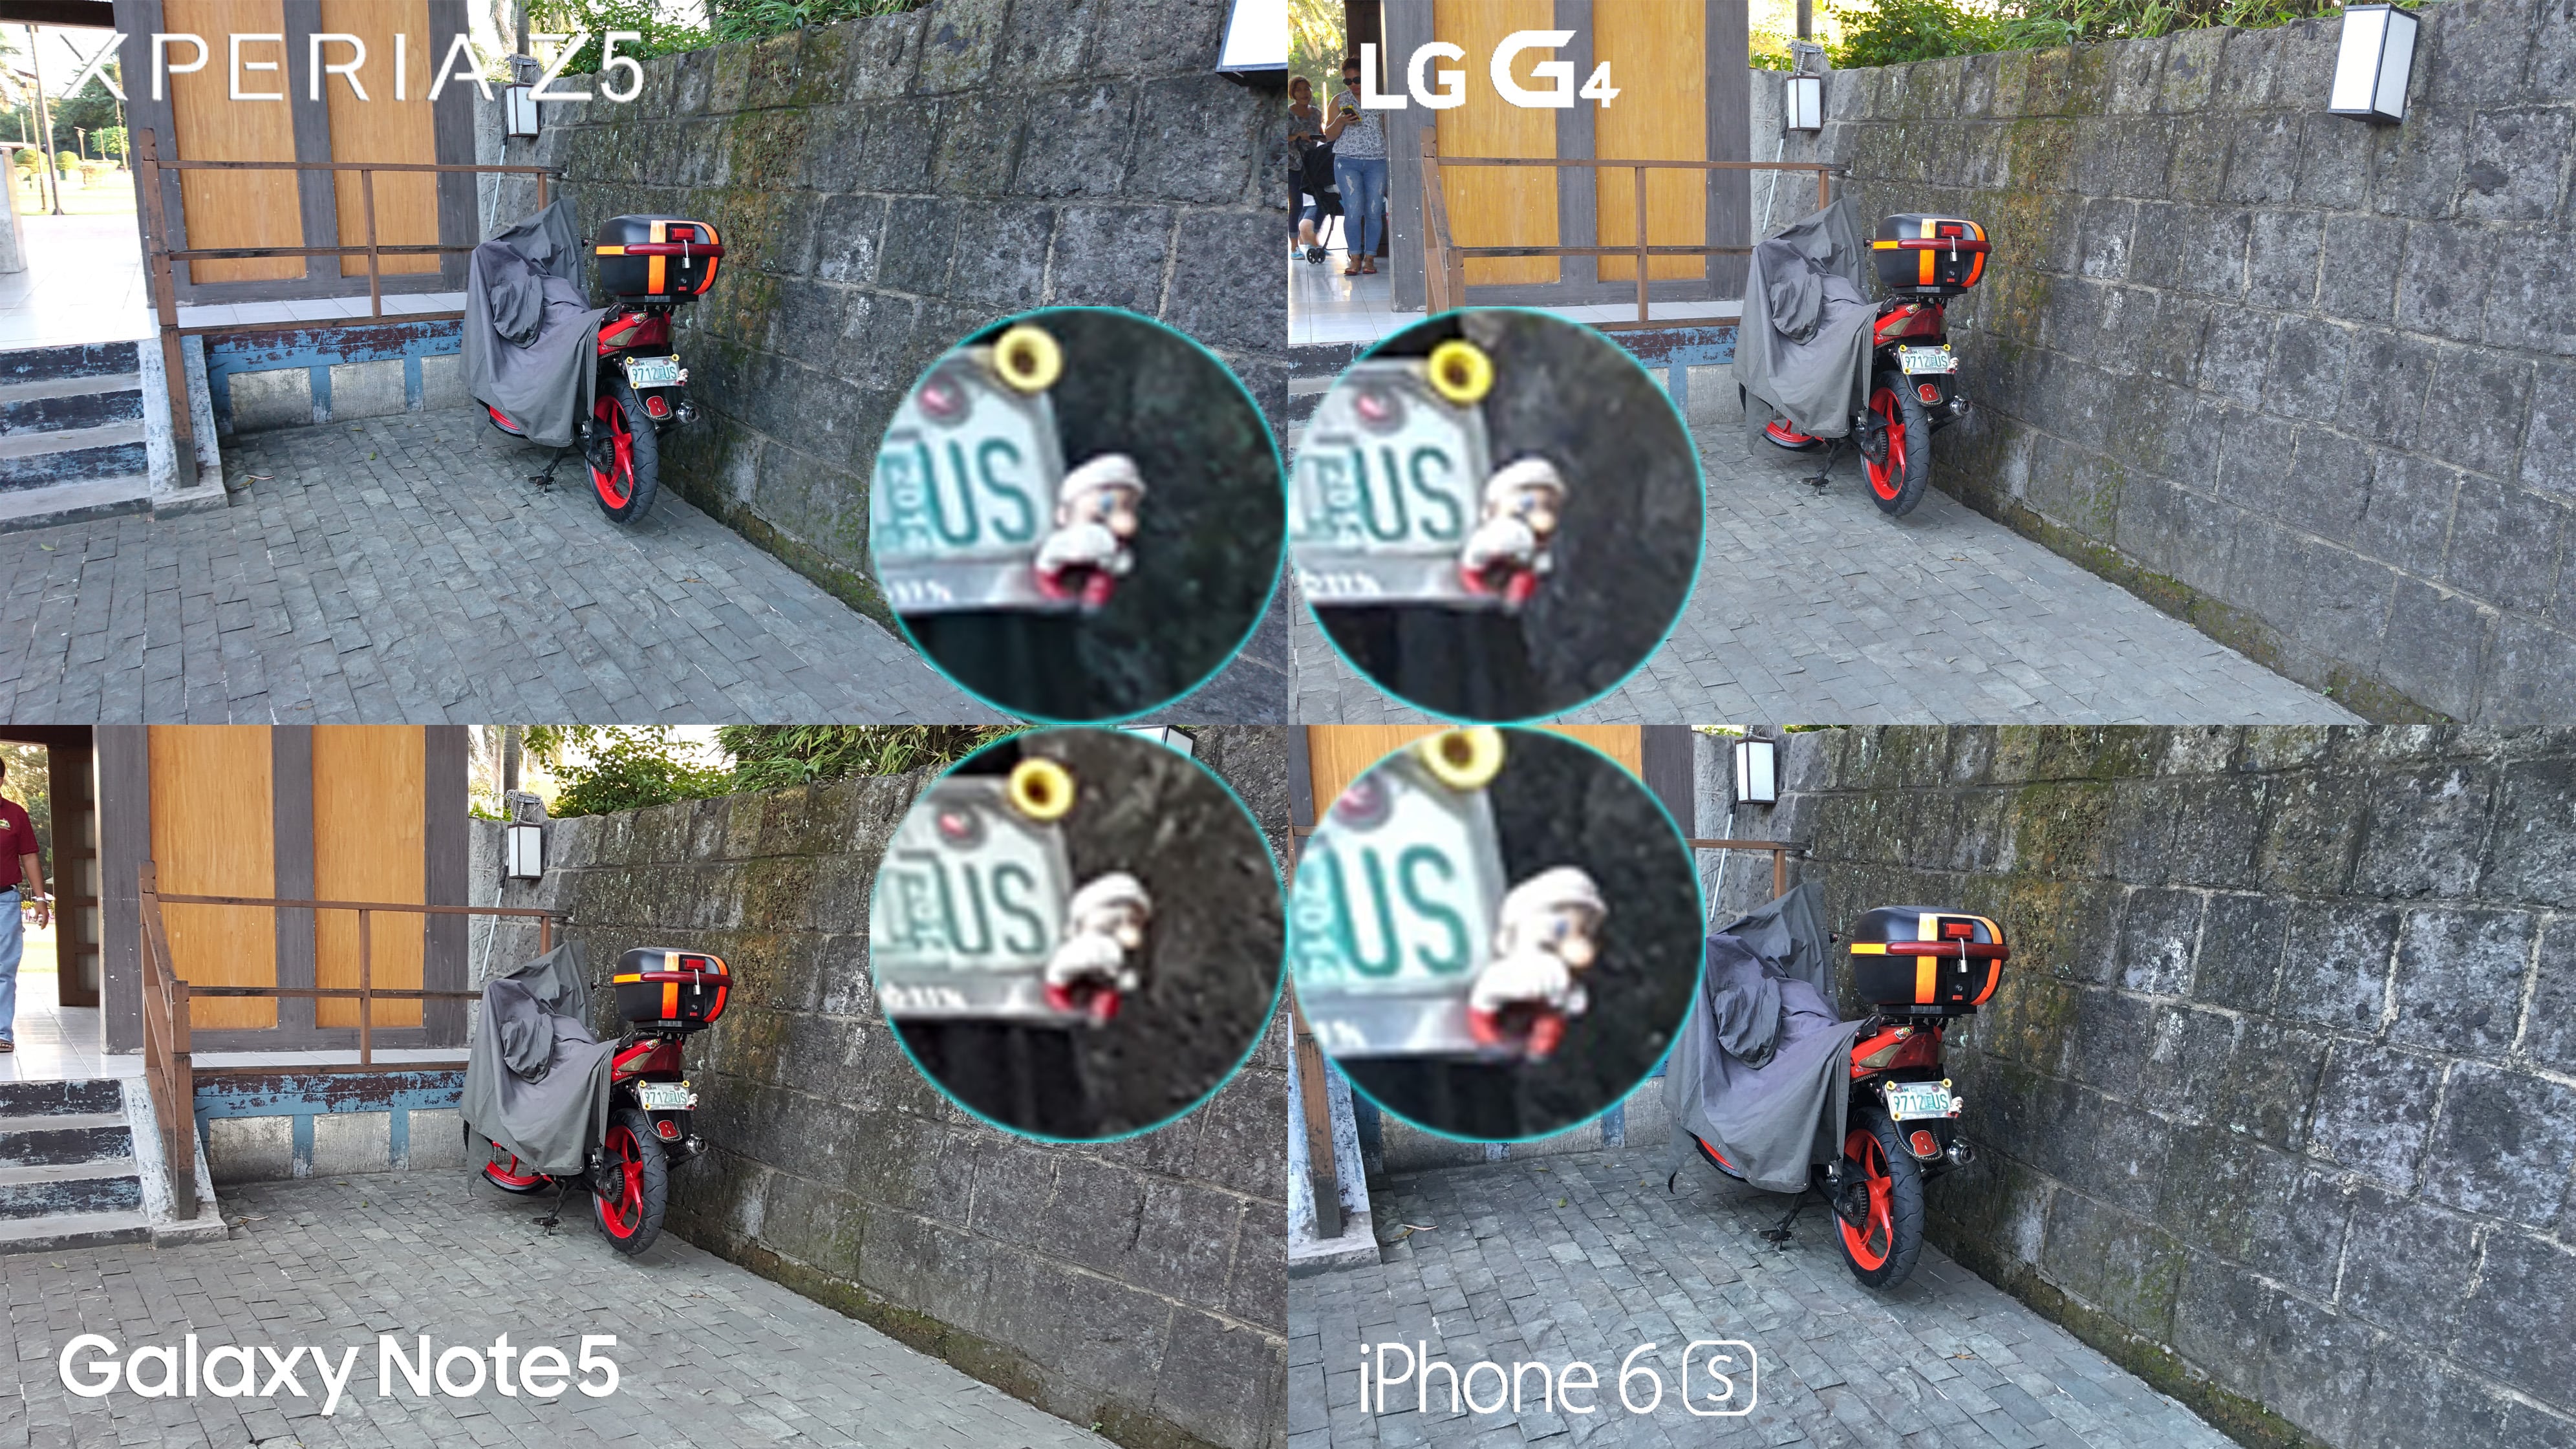 xperia-z5-lg-g4-iphone-6s-galaxy-note-5-camera-review-comparison13-min